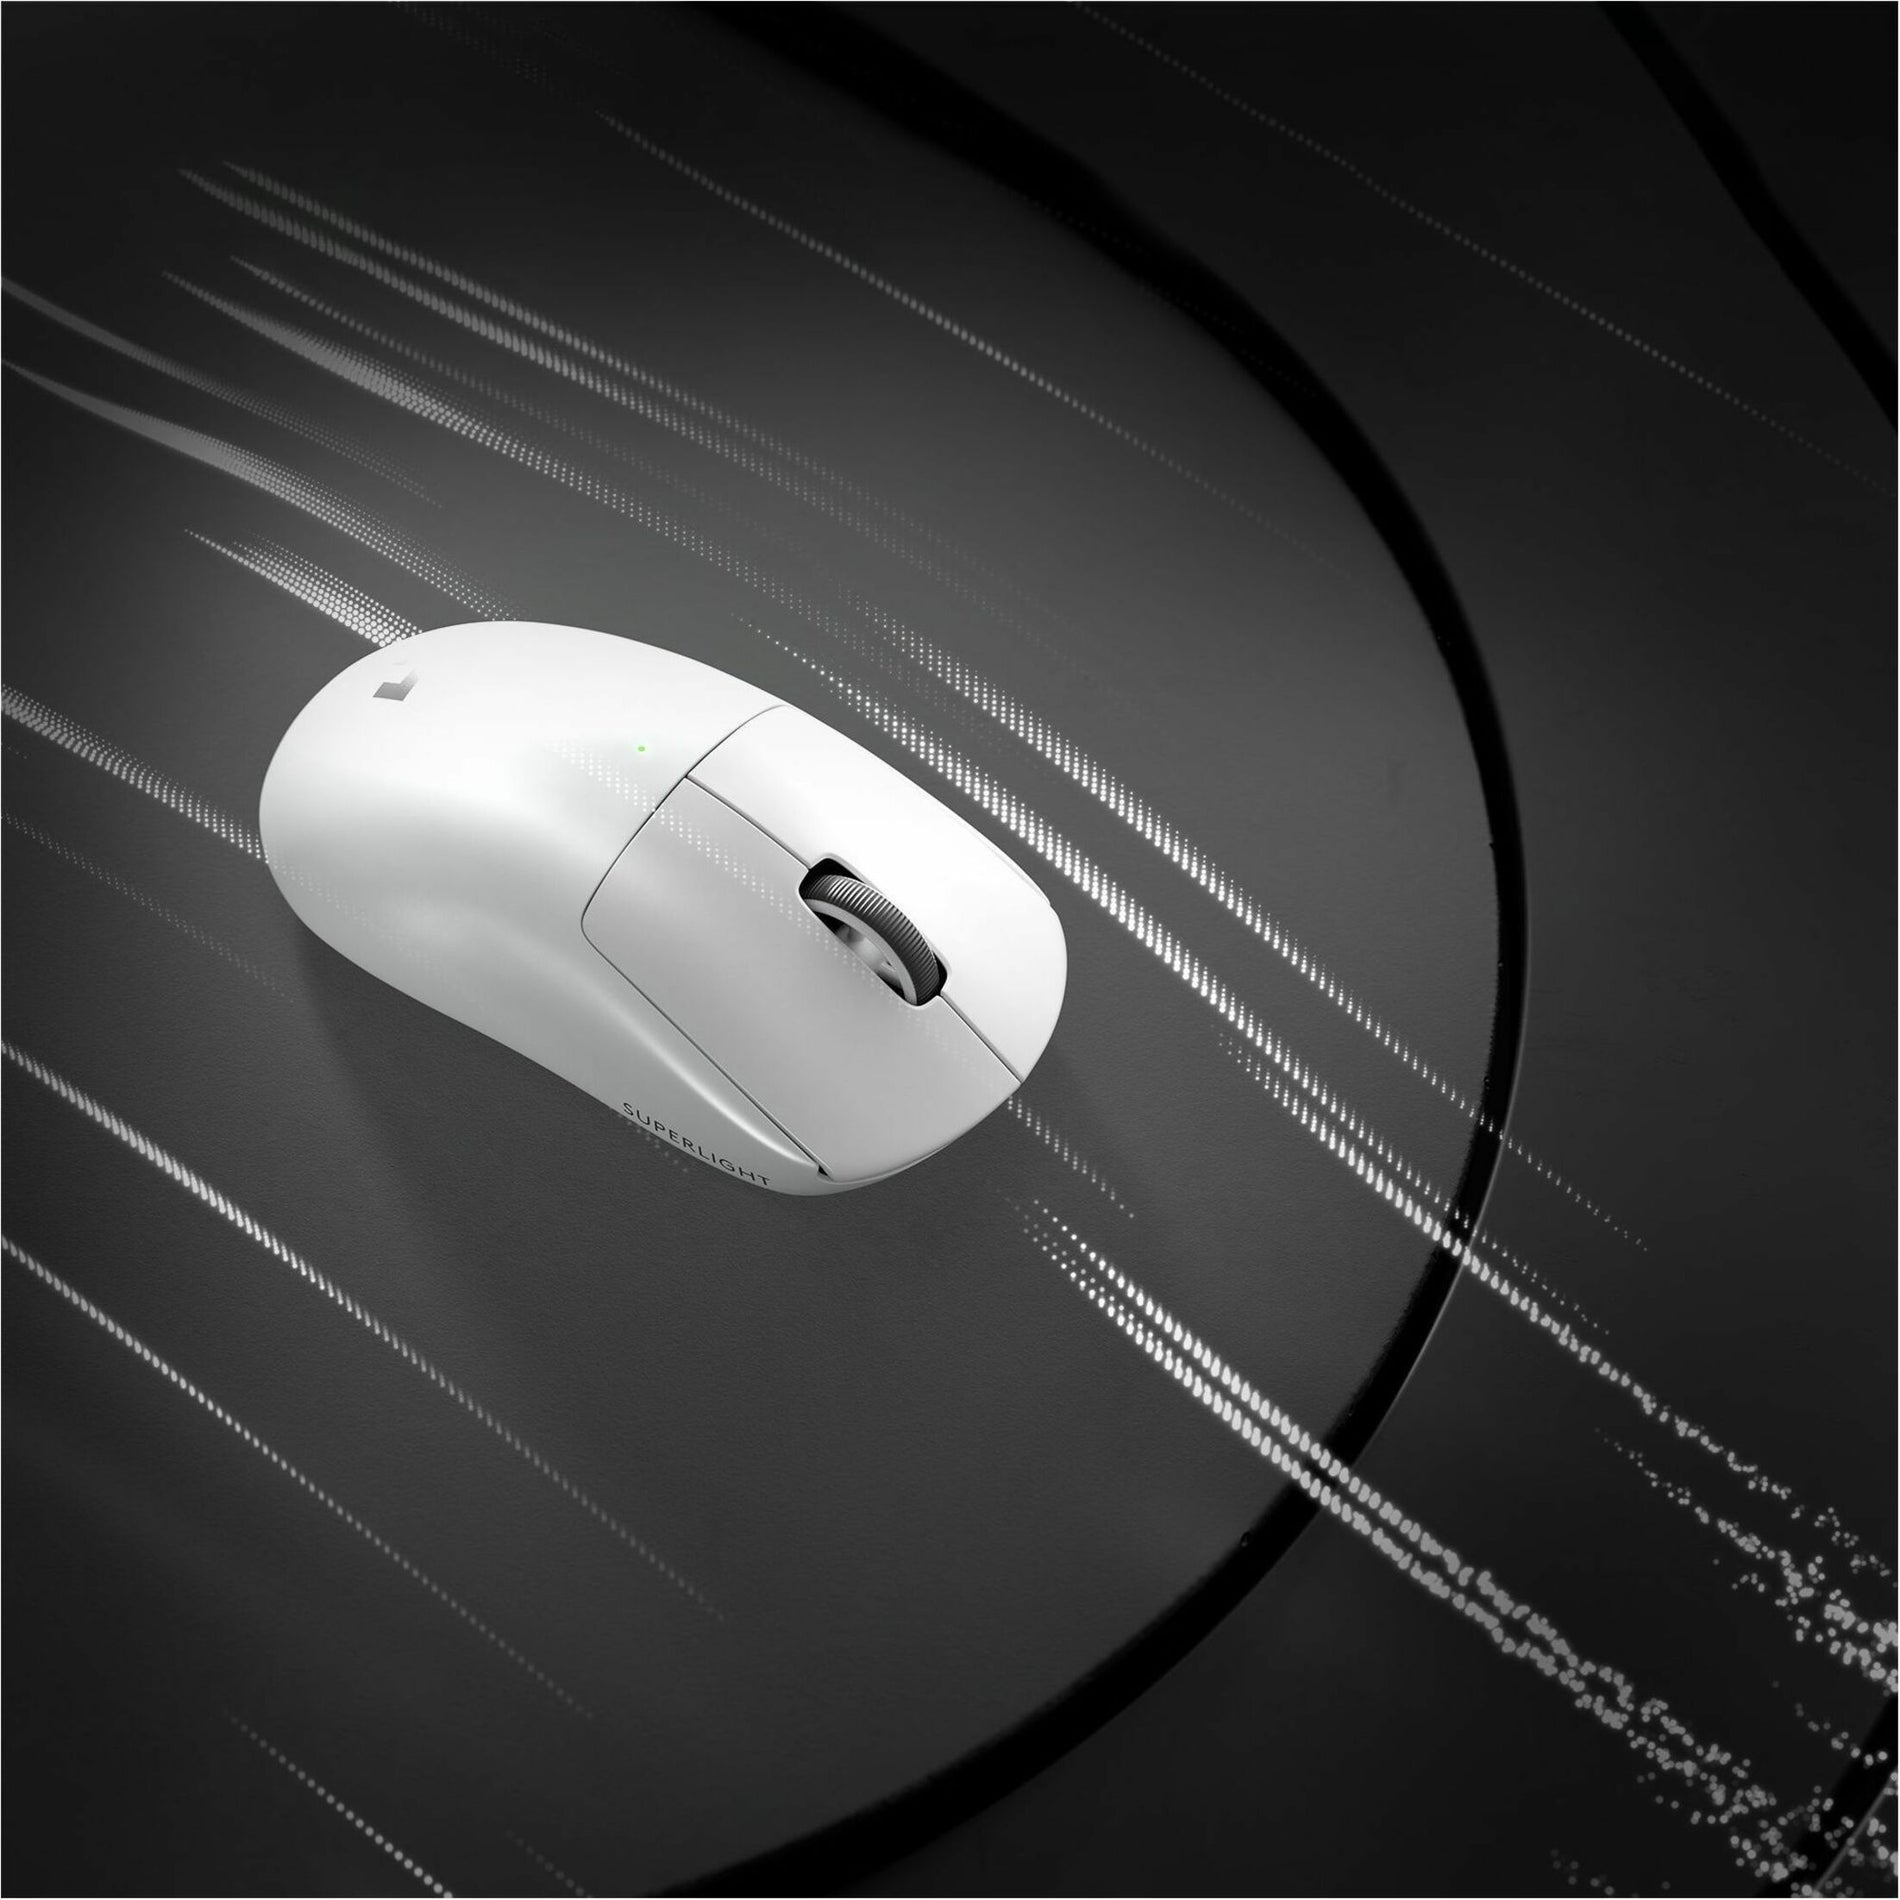 Logitech G 910-006636 PRO X Superlight 2 Lightspeed Gaming Mouse, Rechargeable, 32000 dpi, Wireless